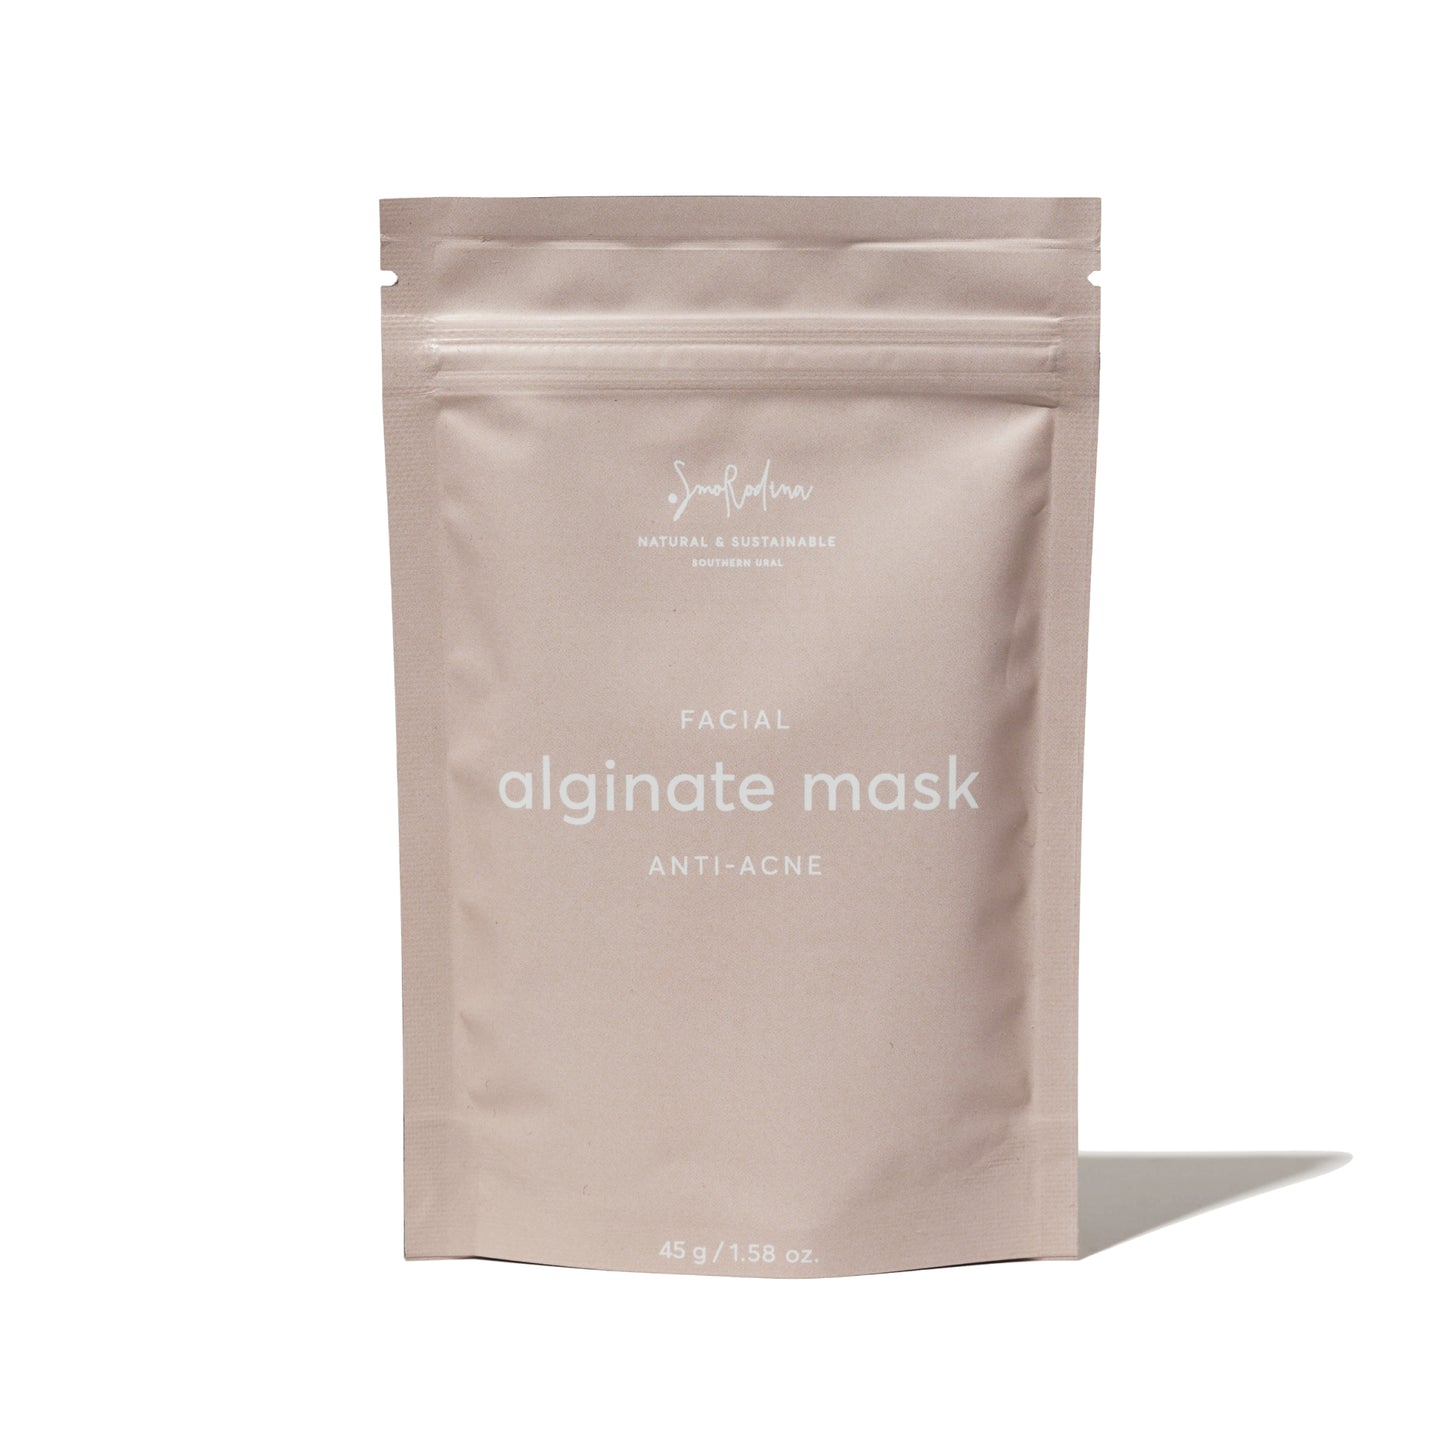 Anti-acne Alginate Mask For Problem Skin